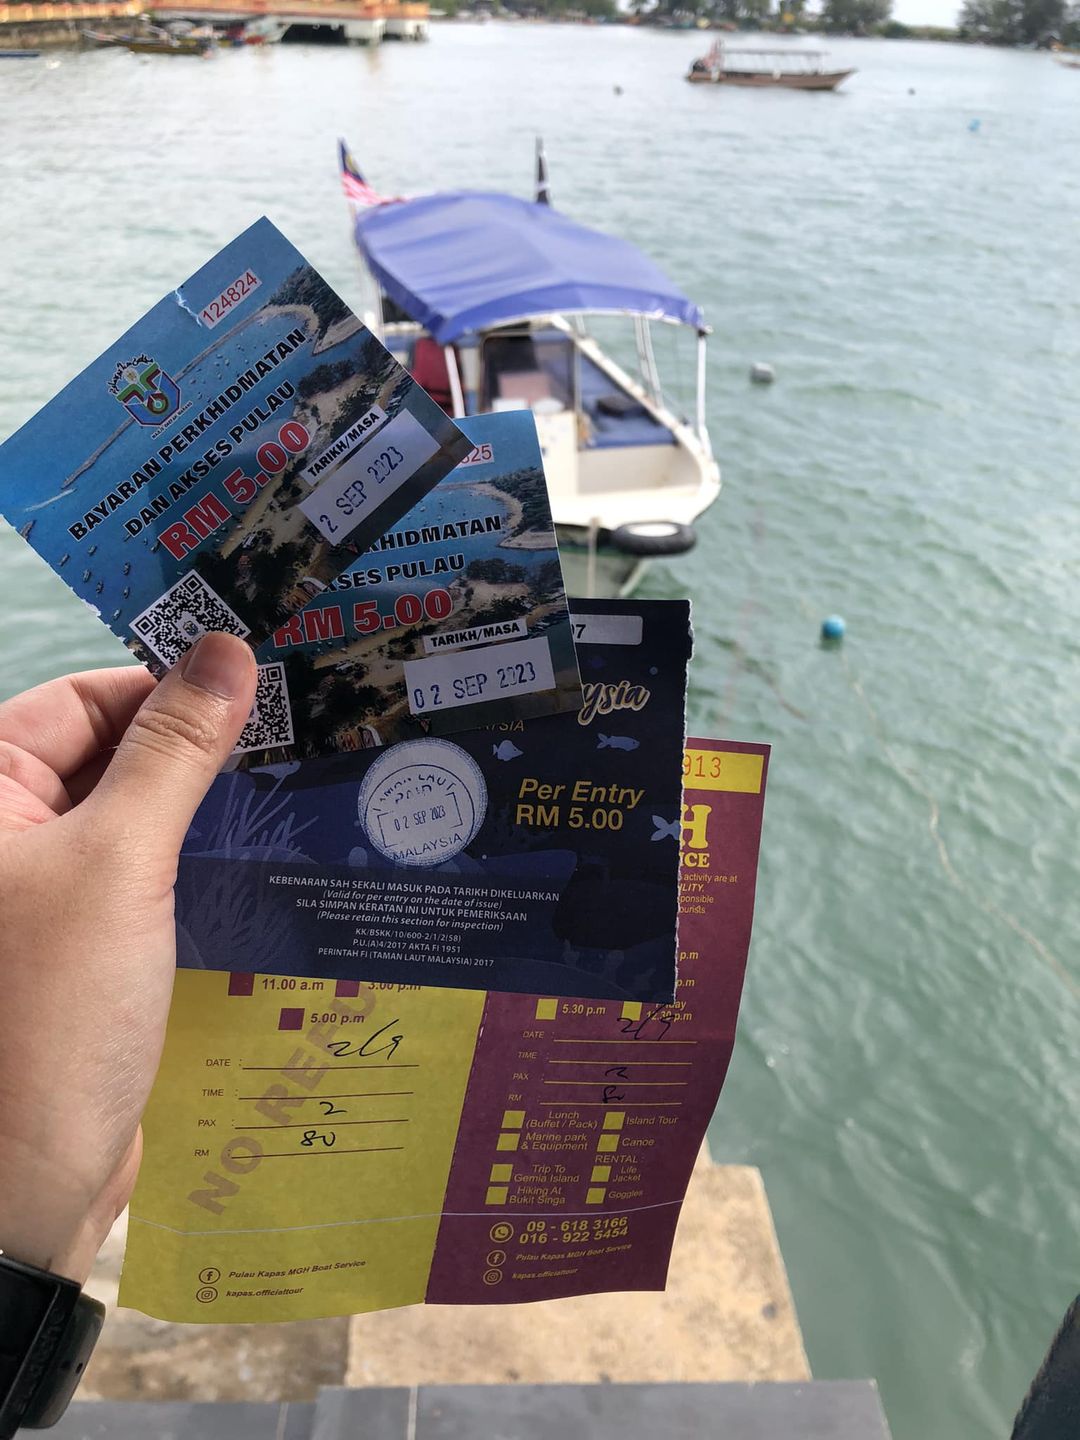 Boat tickets by farah azianti